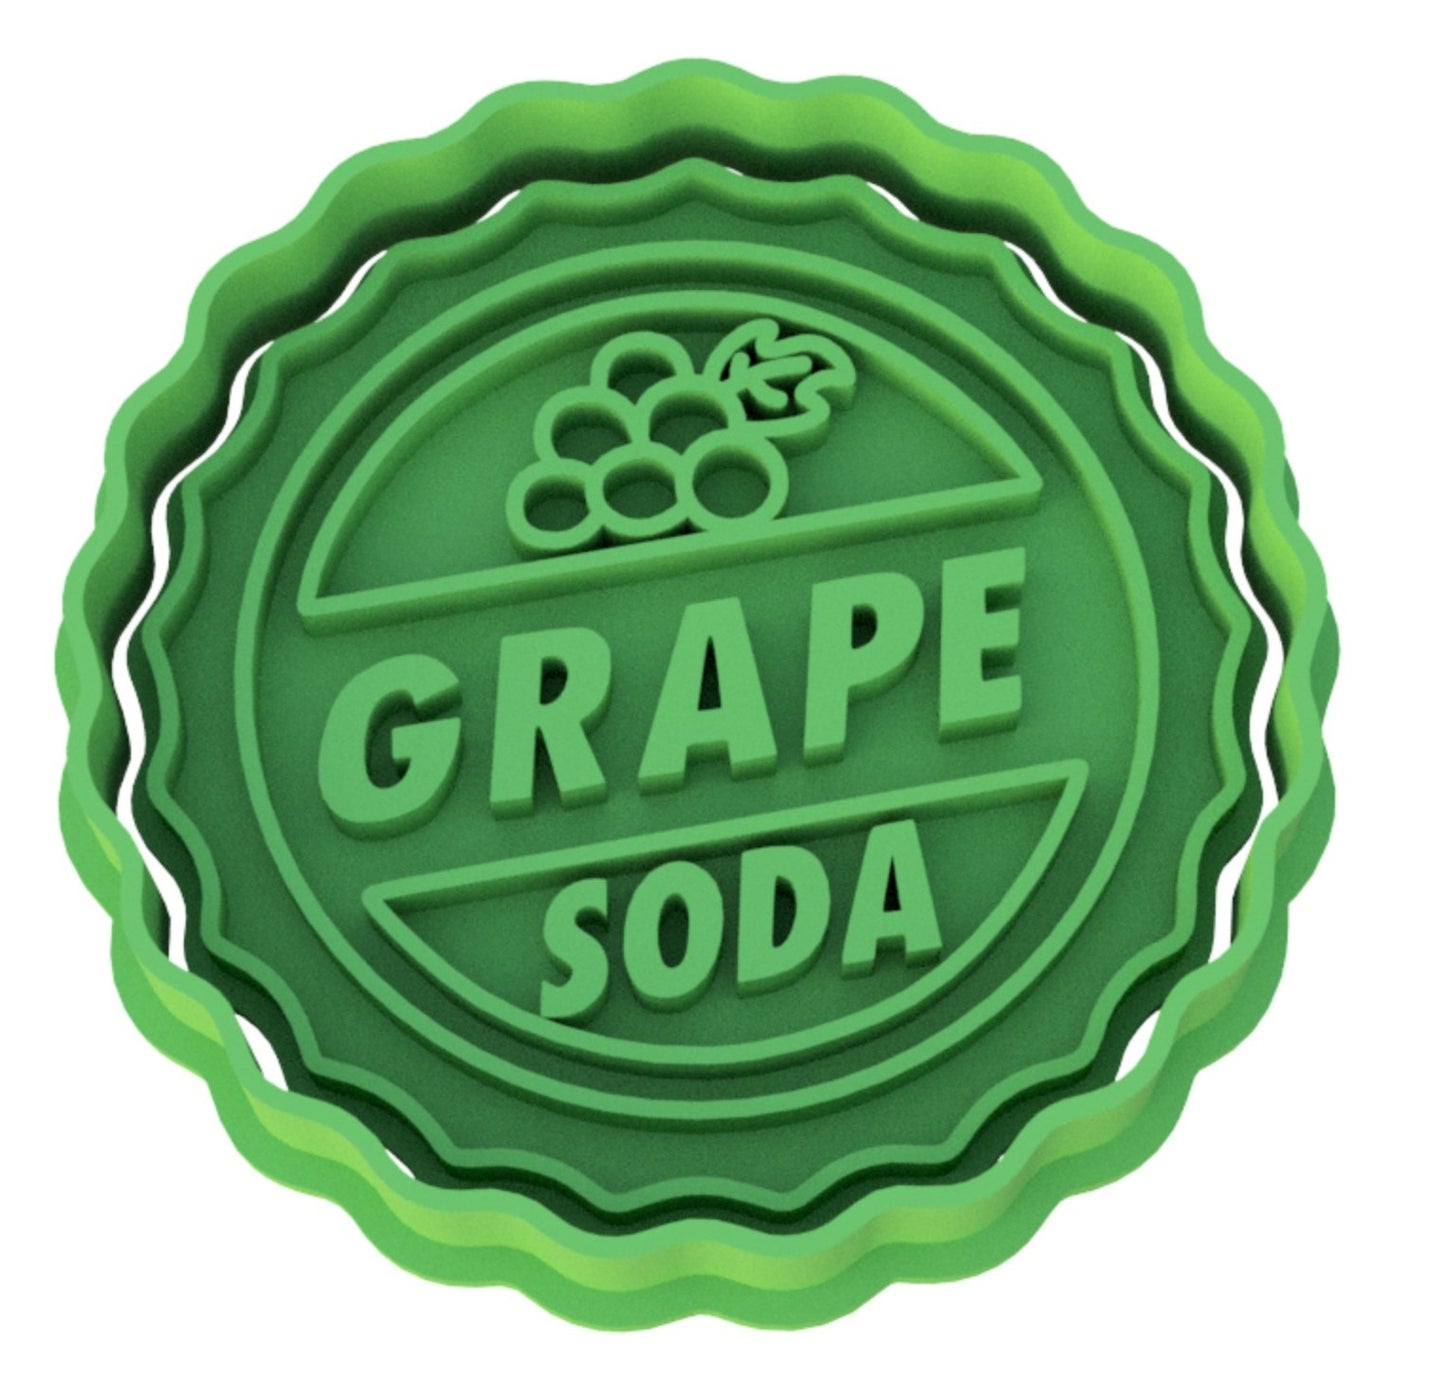 Disney Pixar Up Grape Soda Cap Cookie Cutter & Stamp